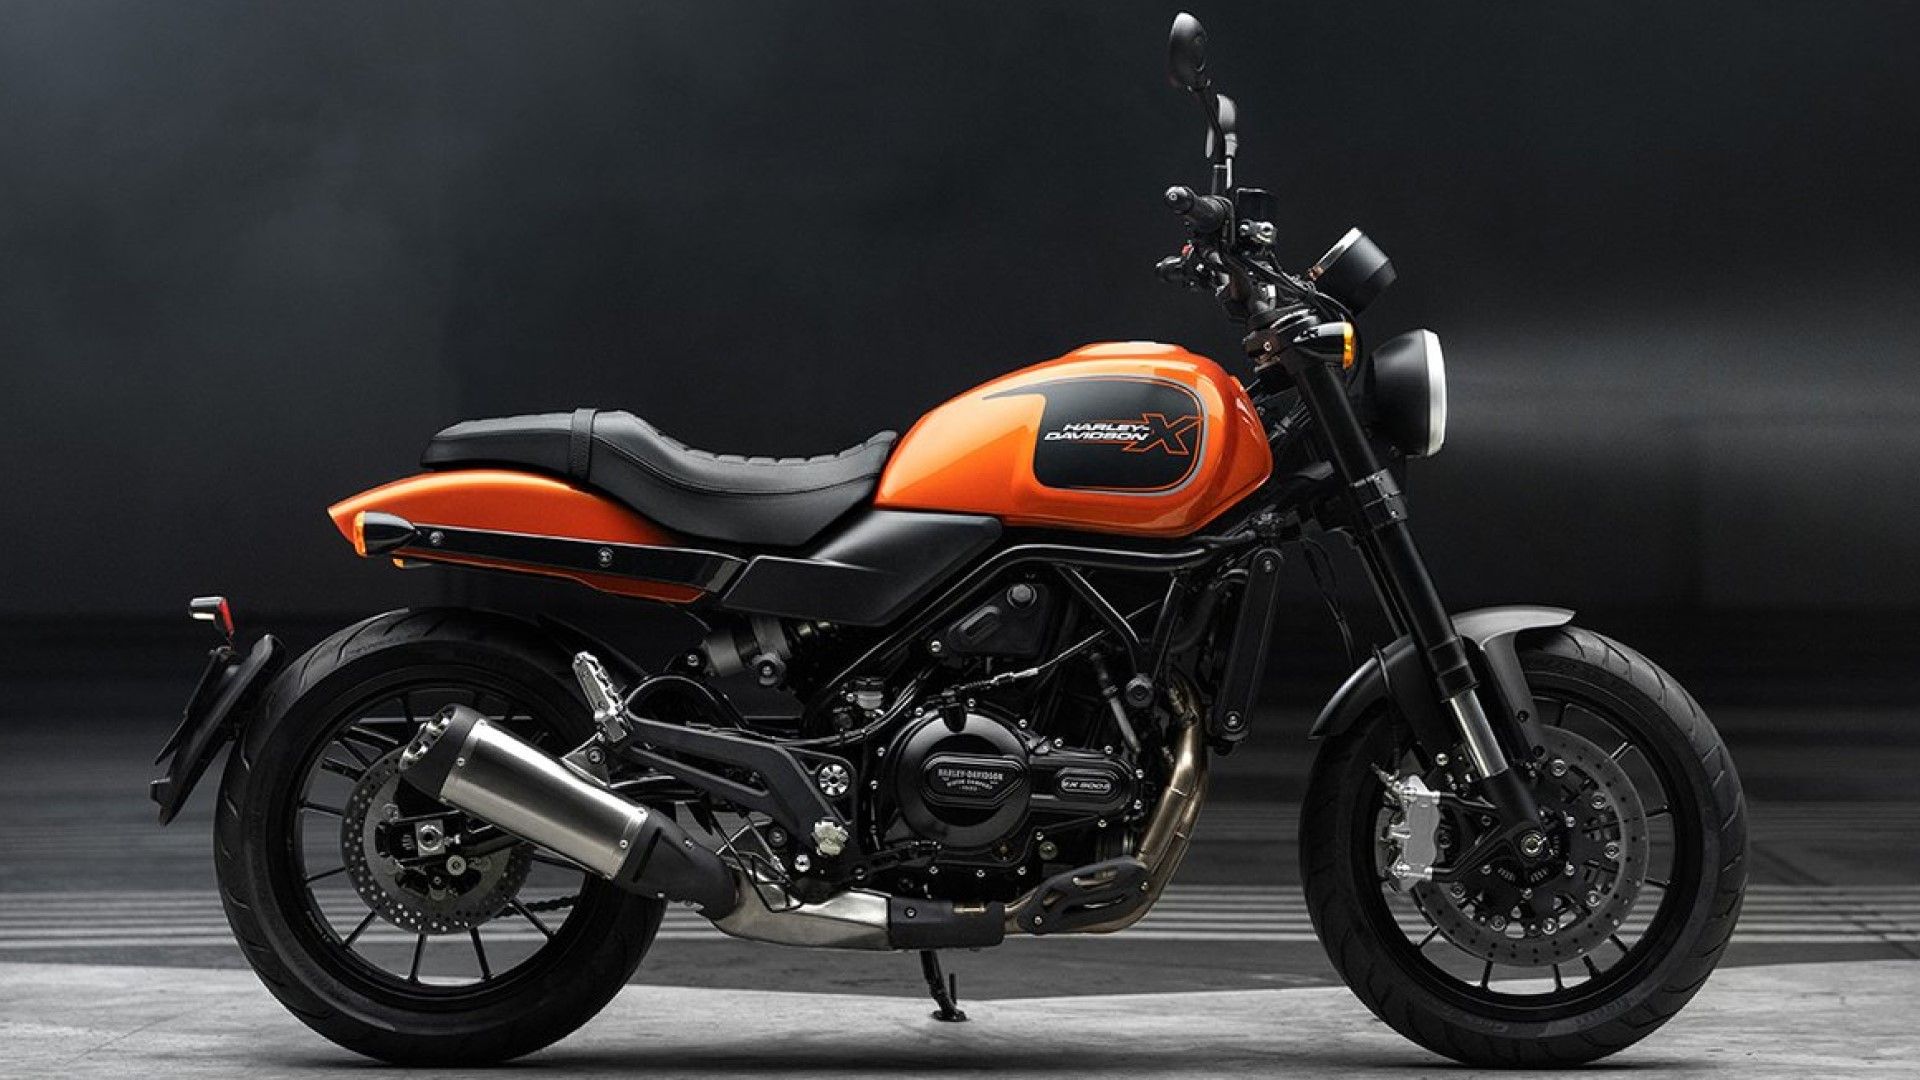 Harley-Davidson X 500 side profile view